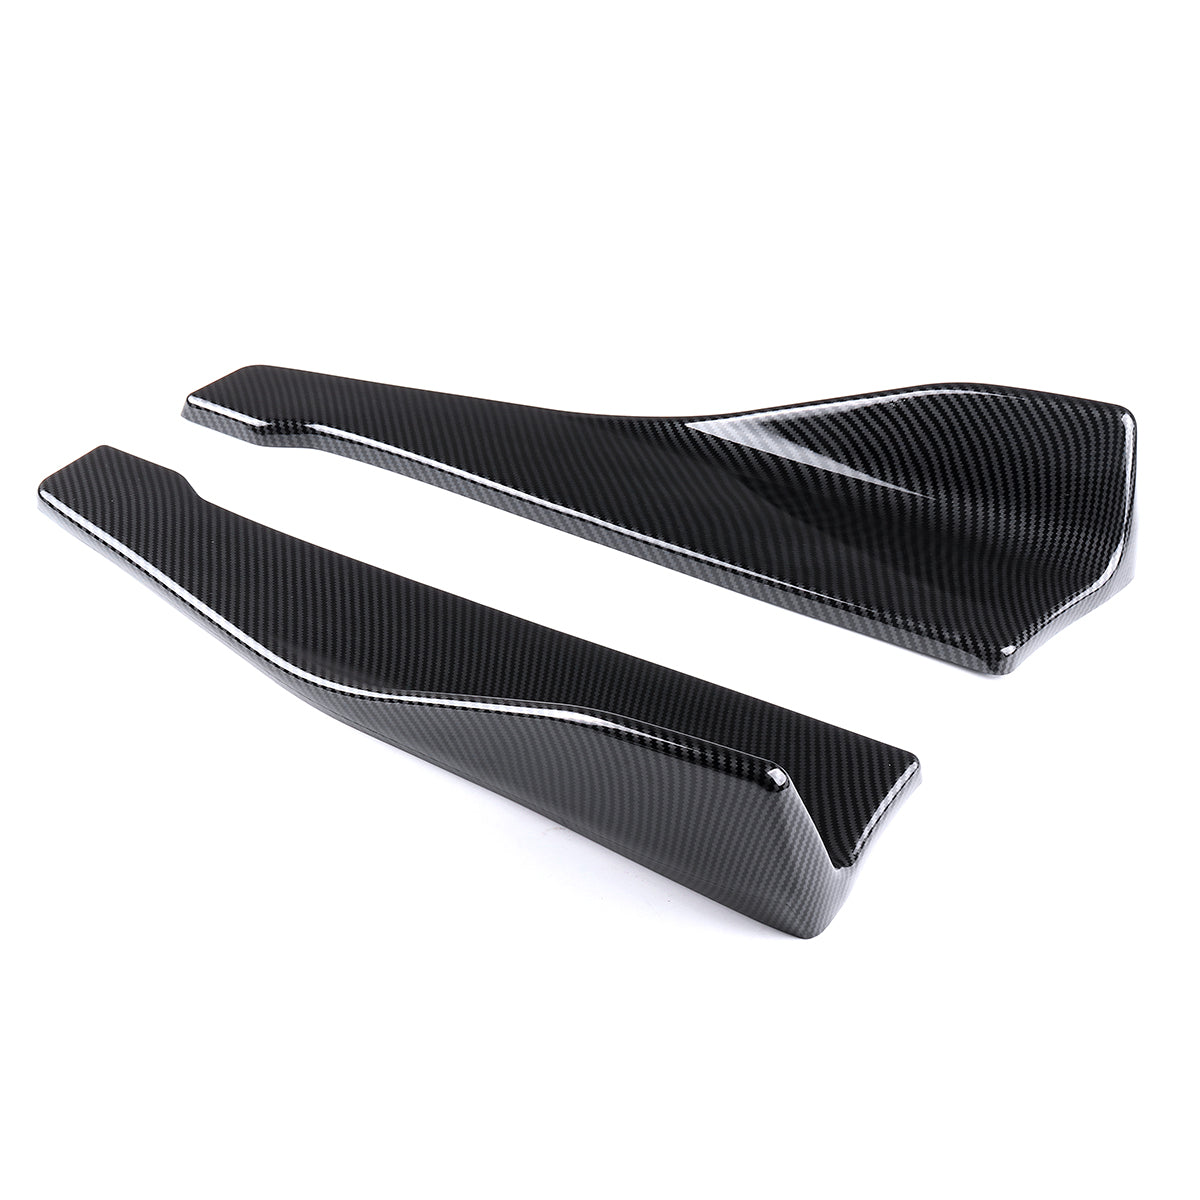 Black 2pcs 48cm Carbon Fiber Universal Anti-Scratch Car Rear Bumper Lip Wrap Angle Splitters Mudguards